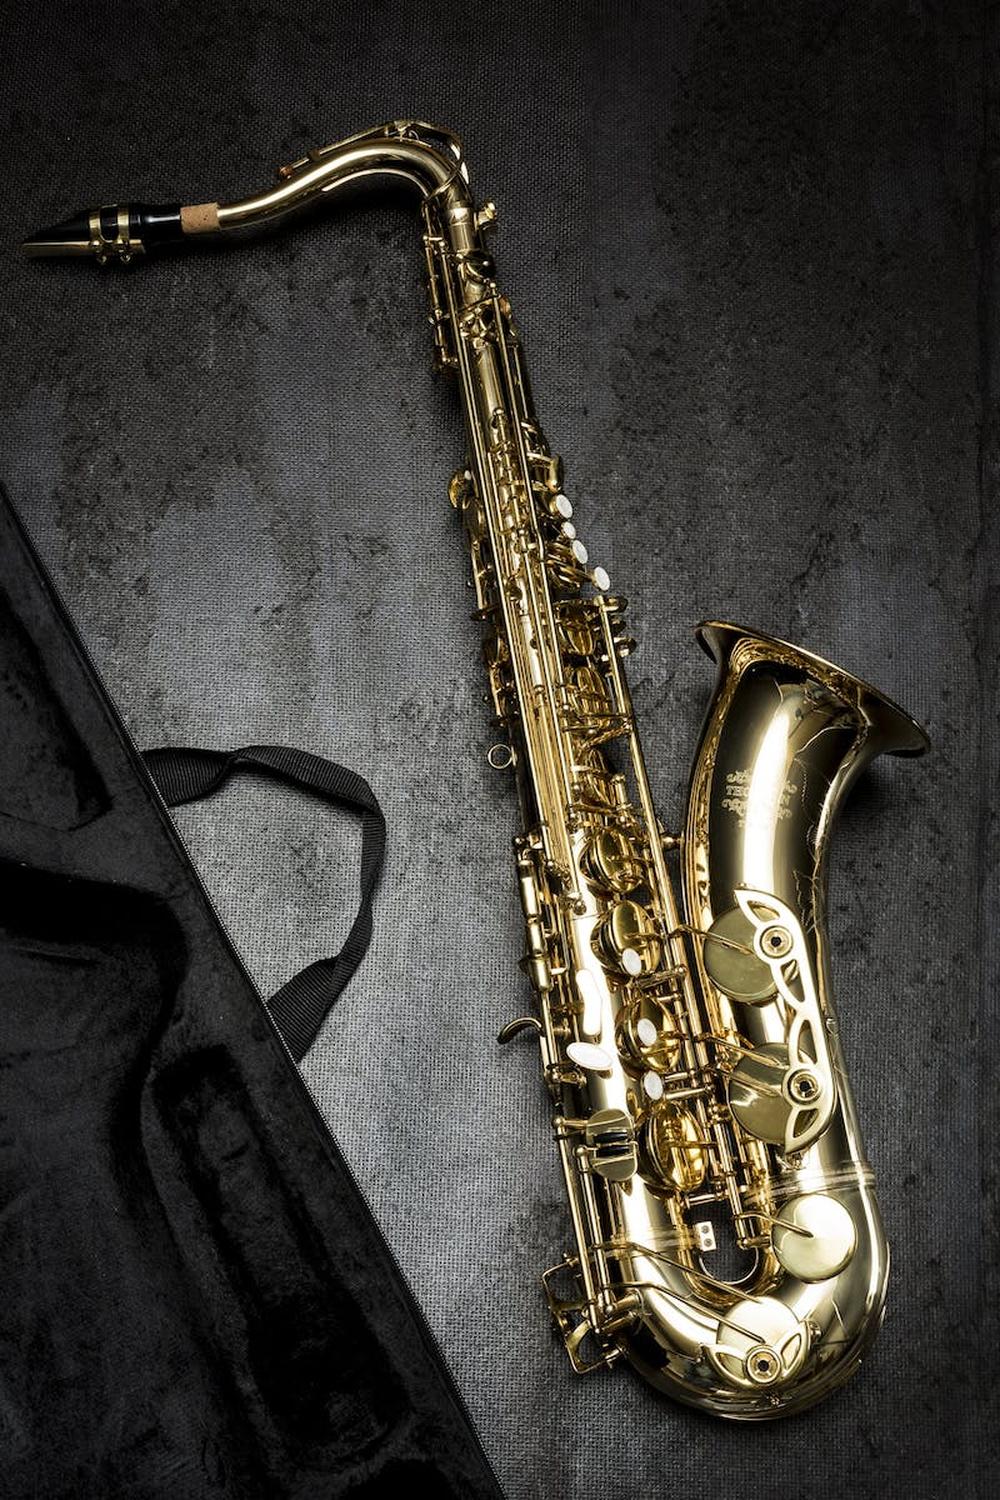 brass_saxophone_on_gray_table_near_black_bag